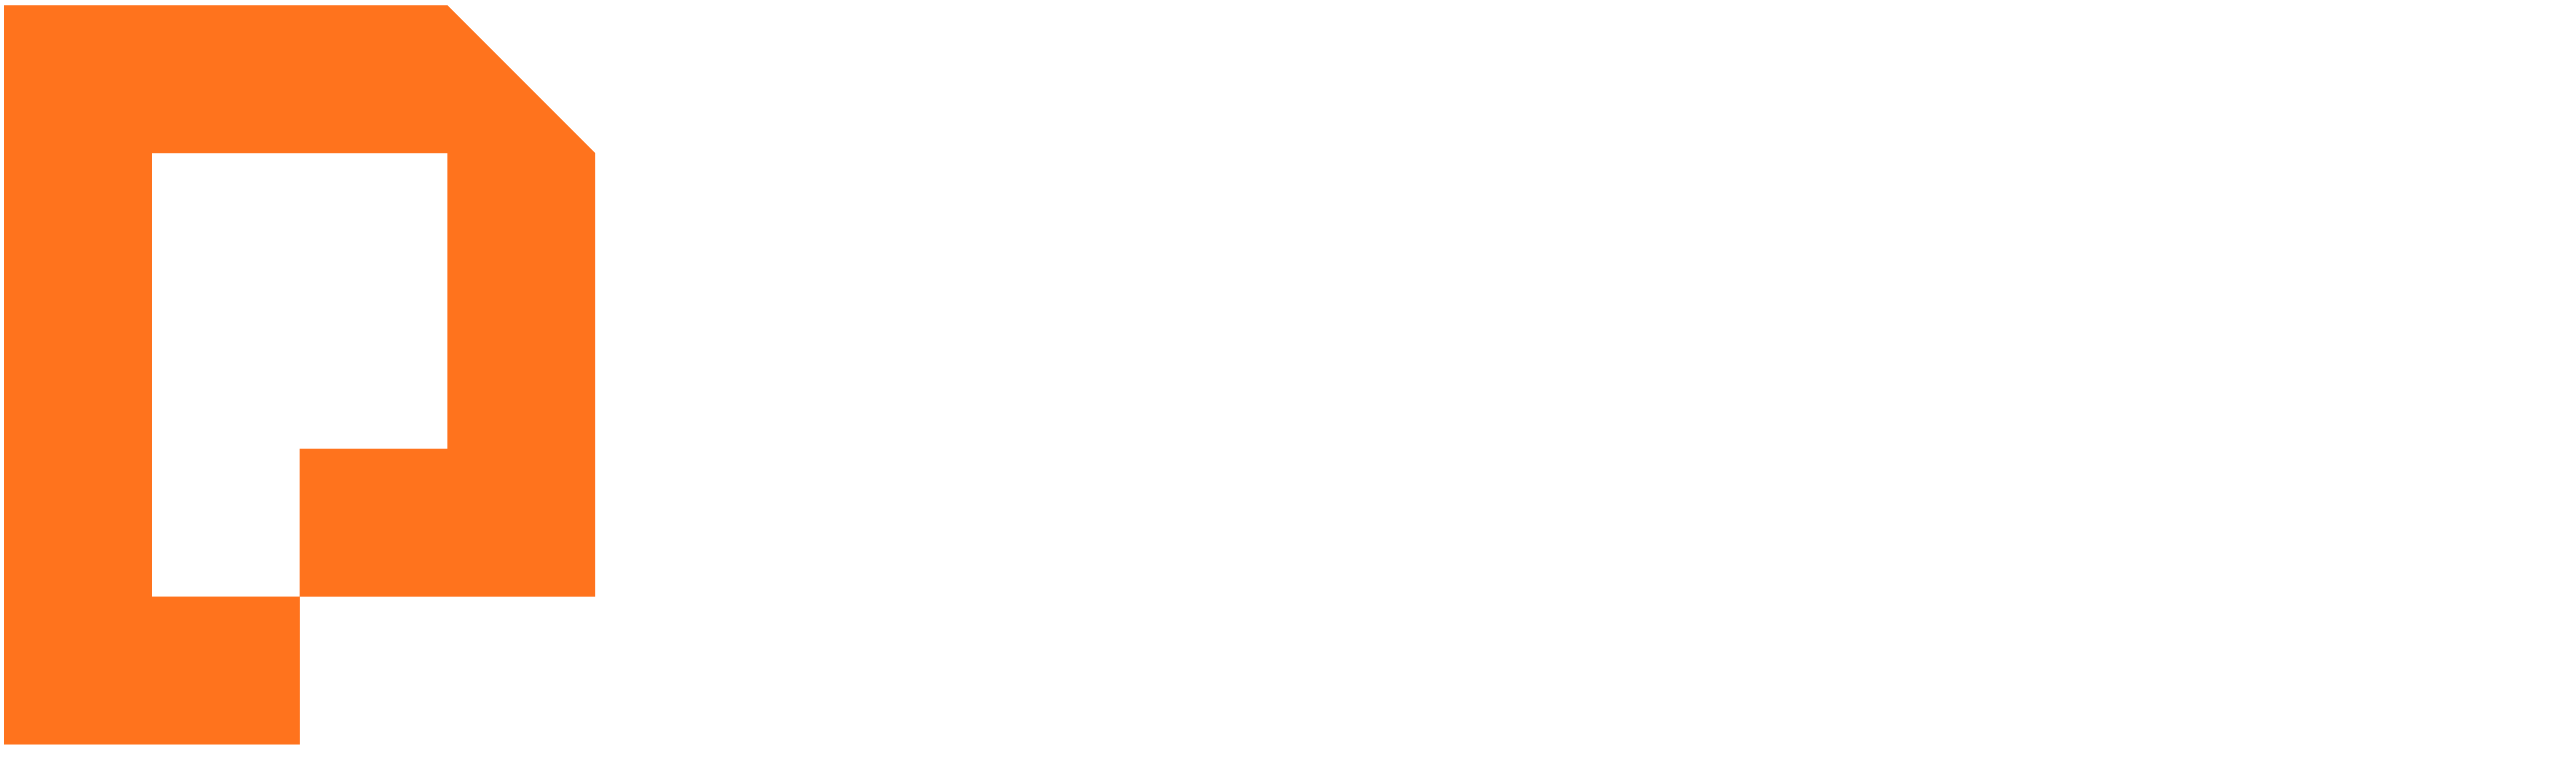 Updated logo-01